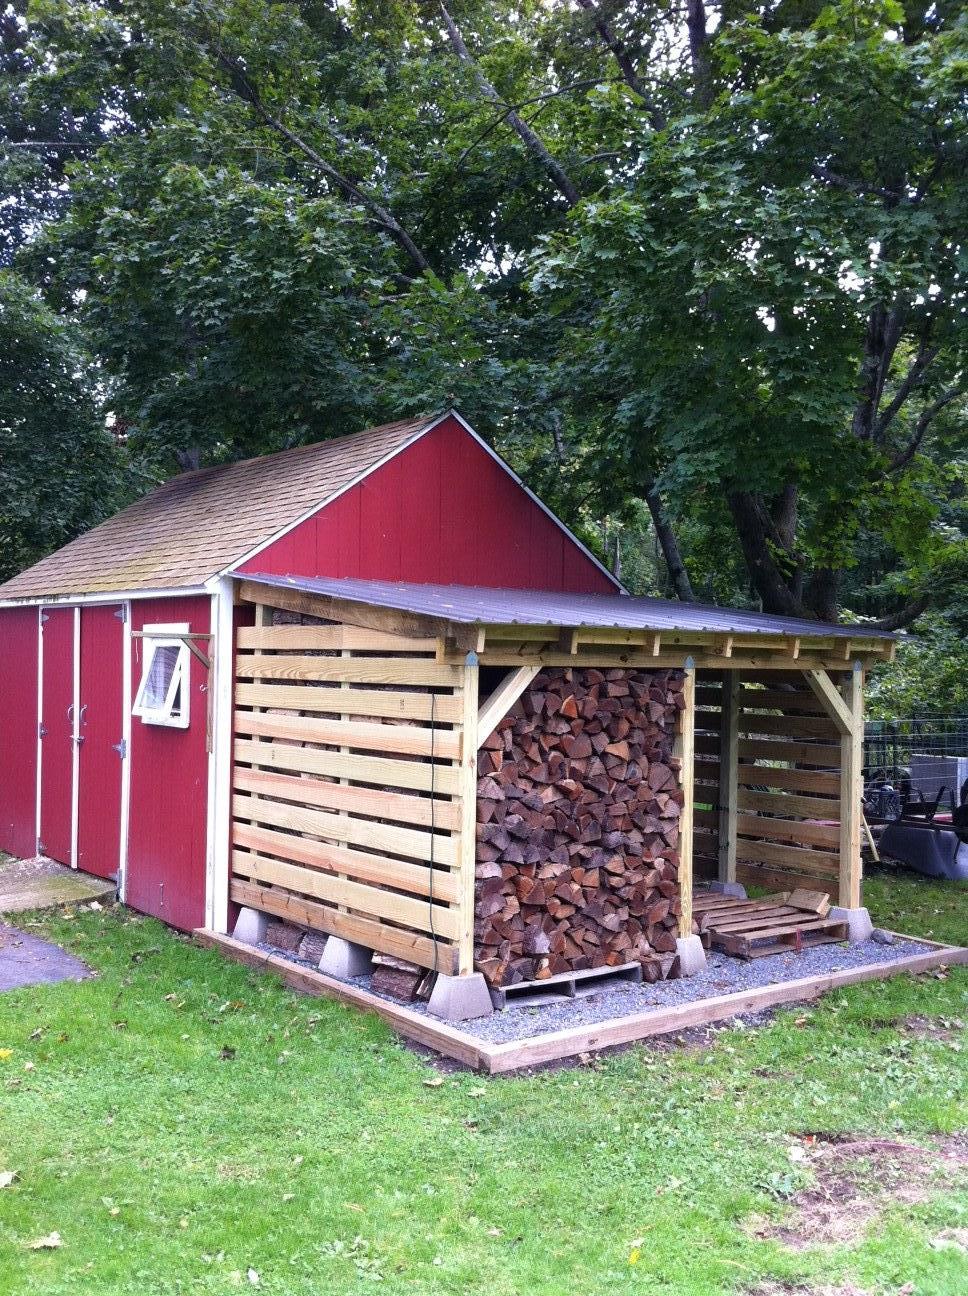 Critique my wood shed design?